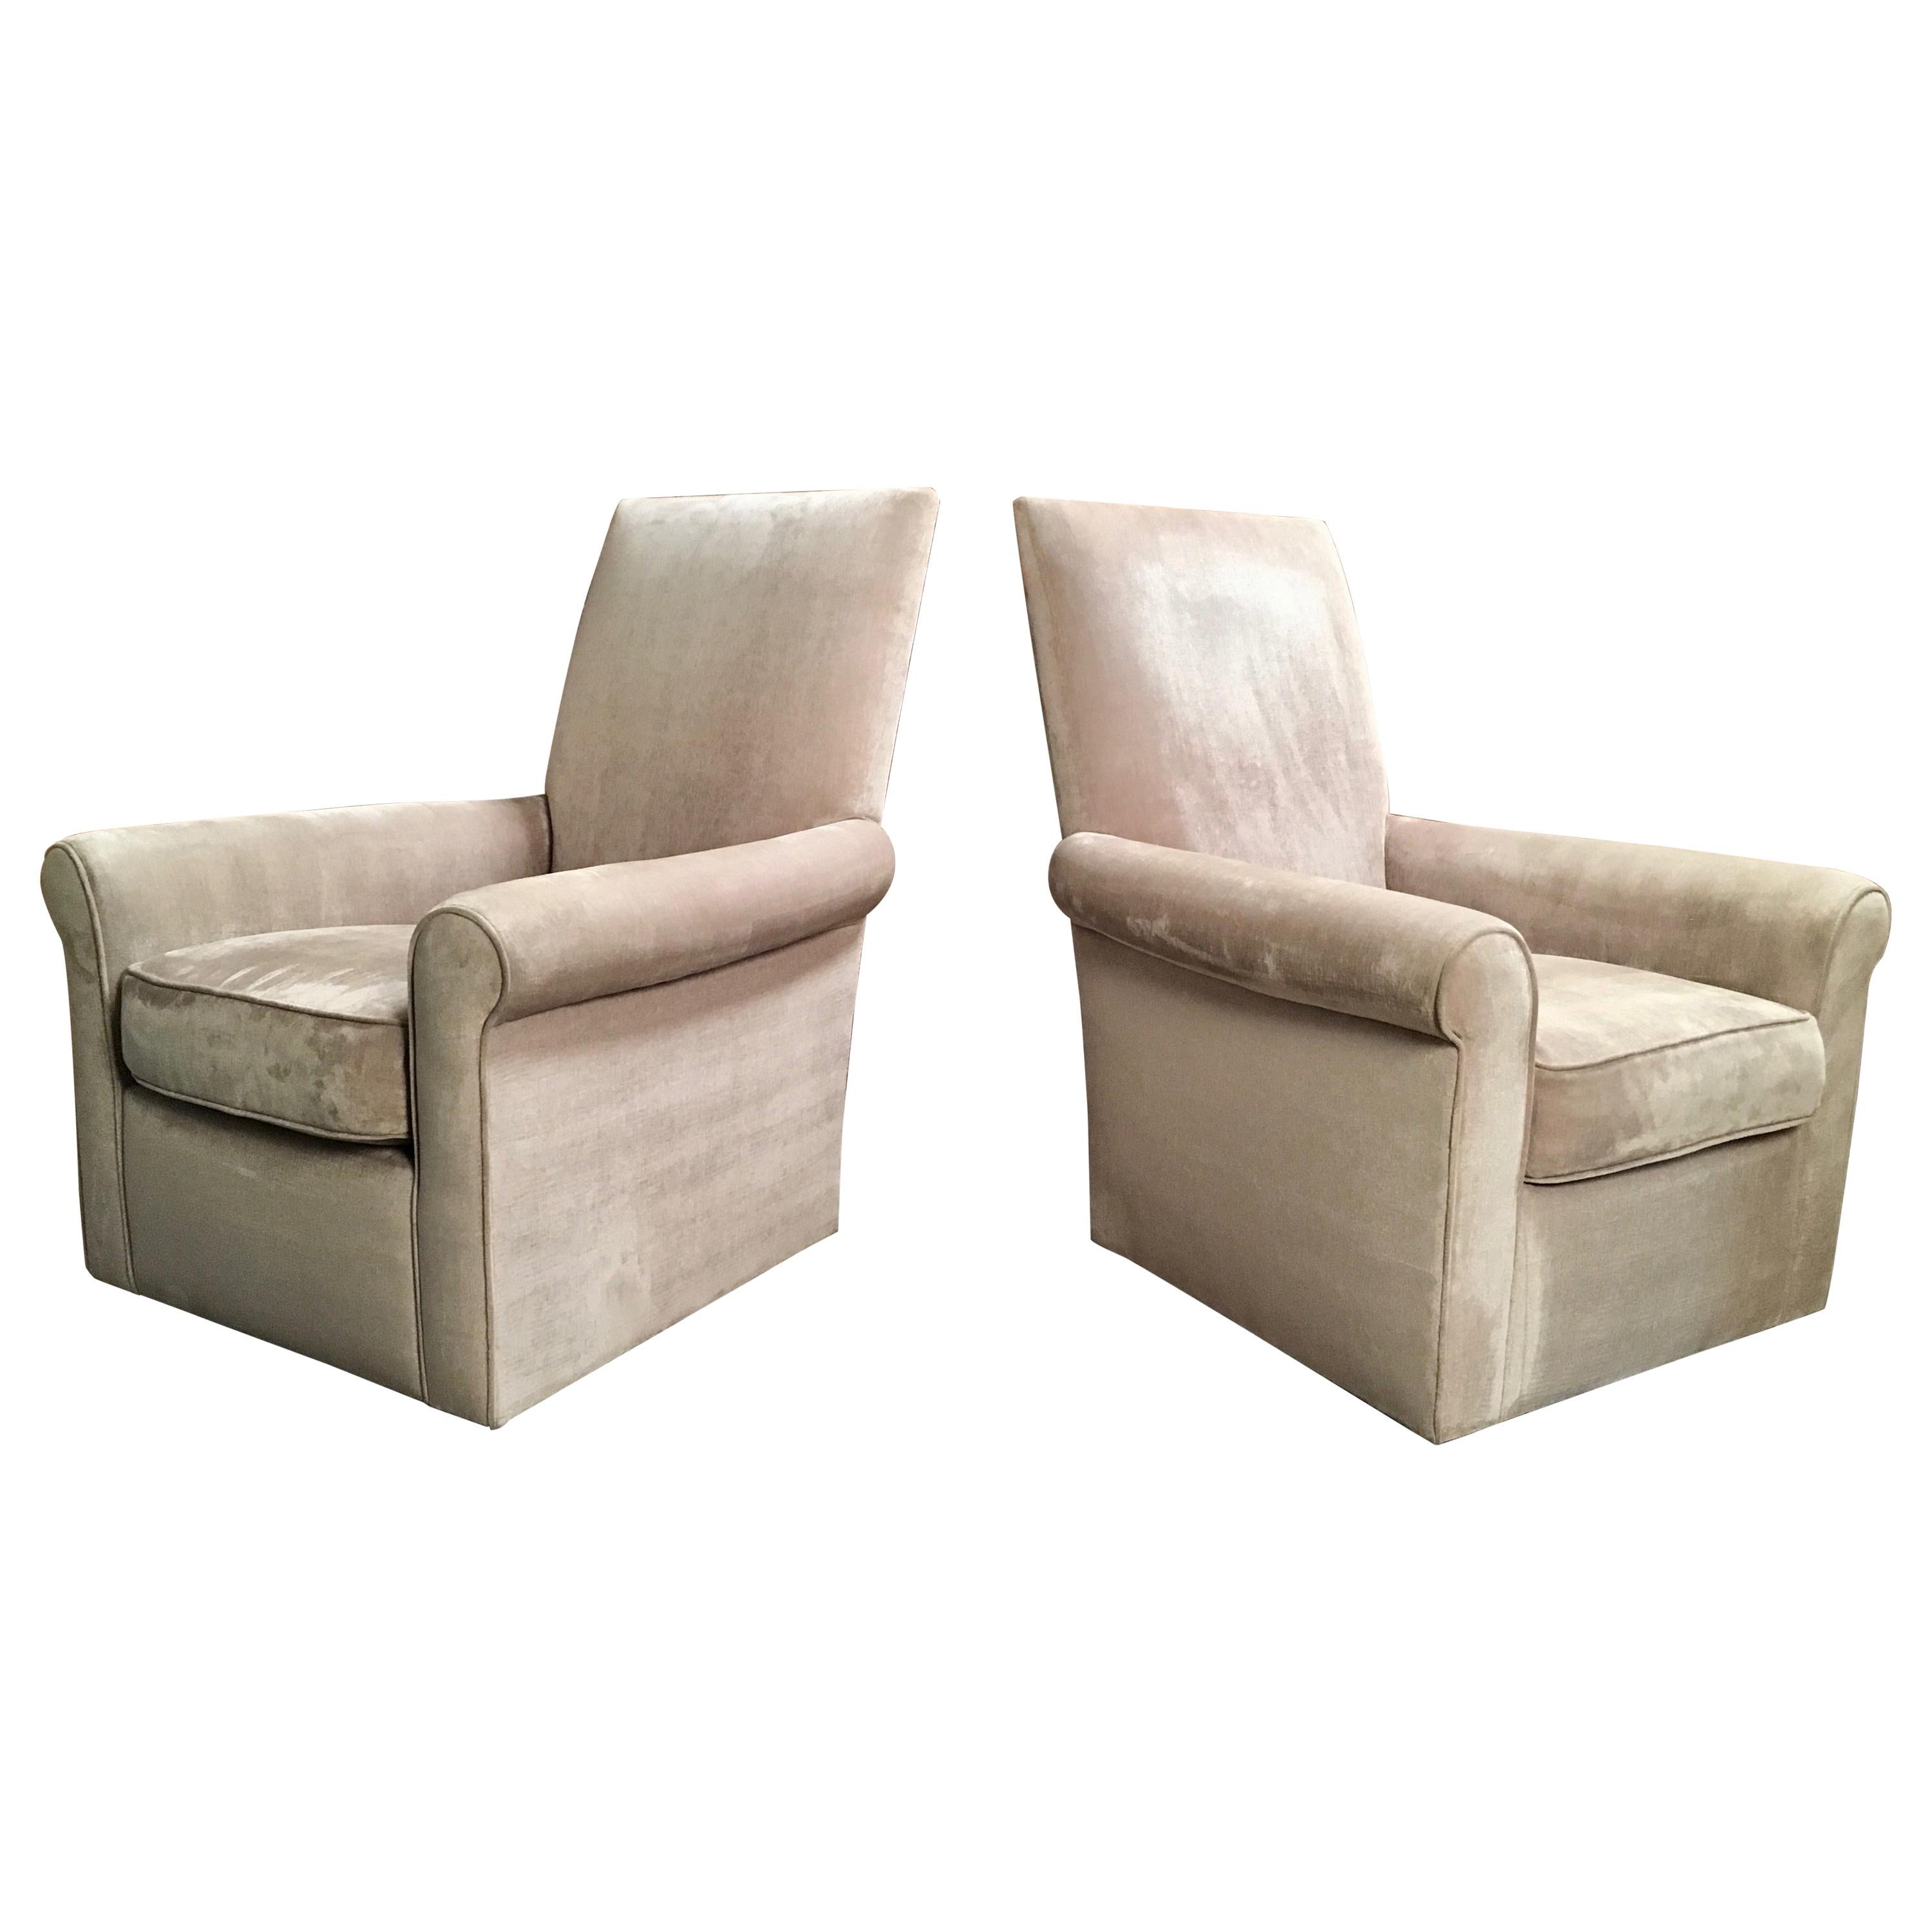 Donghia "St. James" Swivel Lounge Chairs